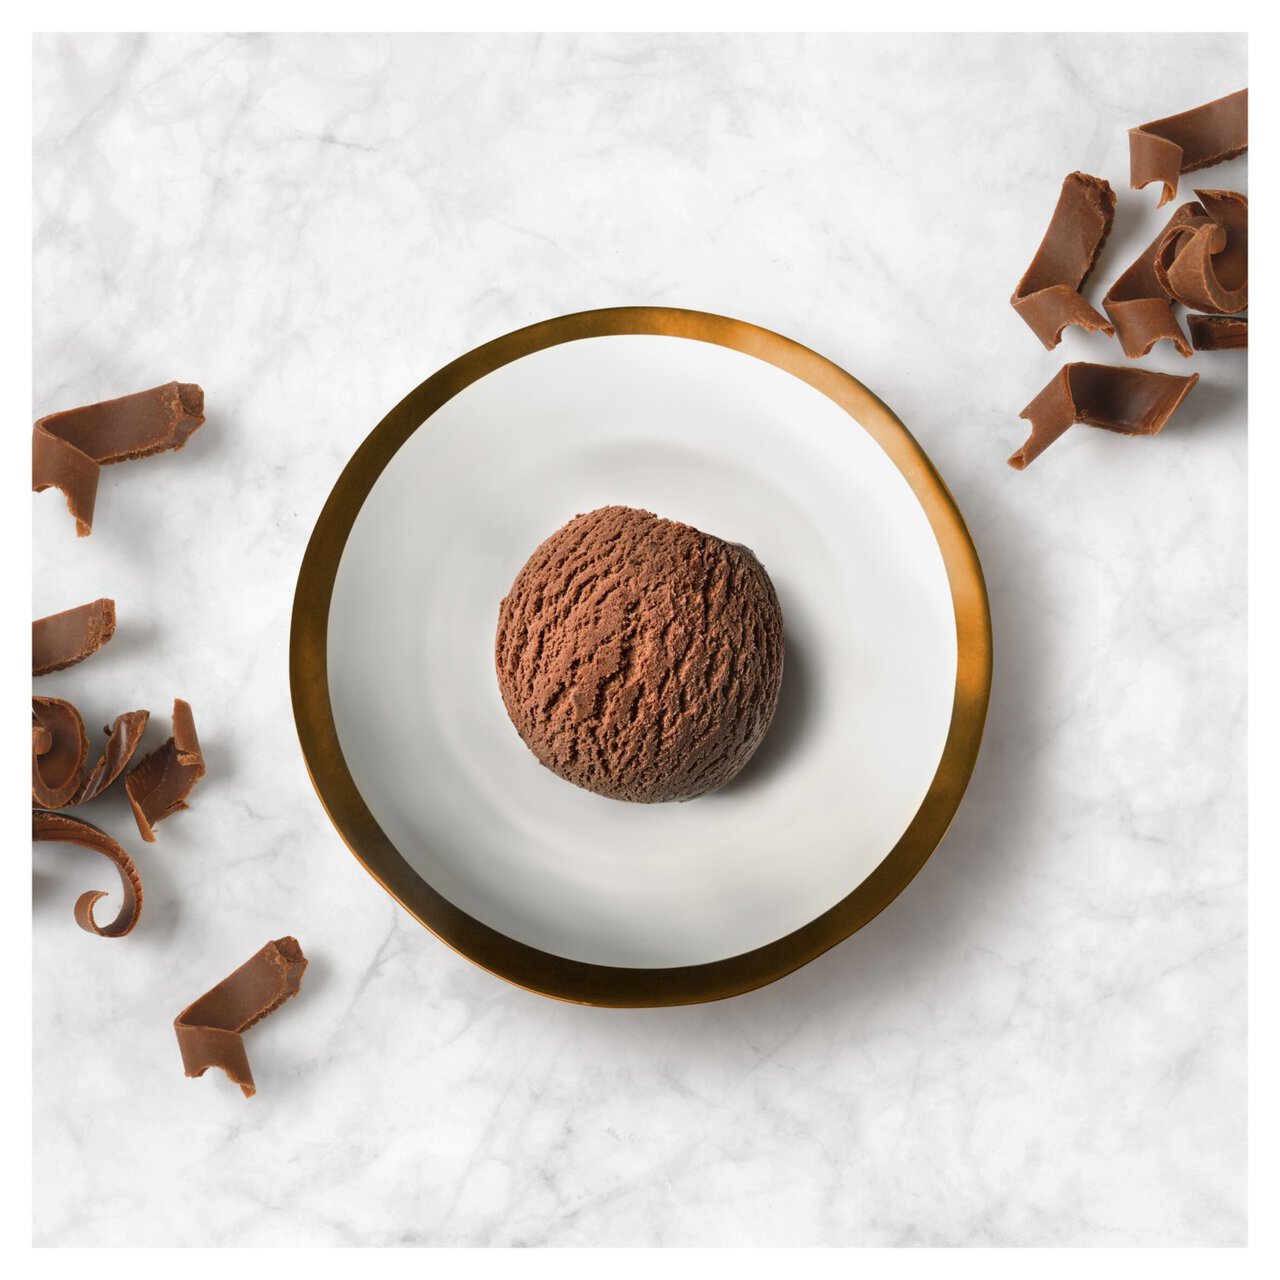 Grom Chocolate Gelato Ice Cream Tub 460ml